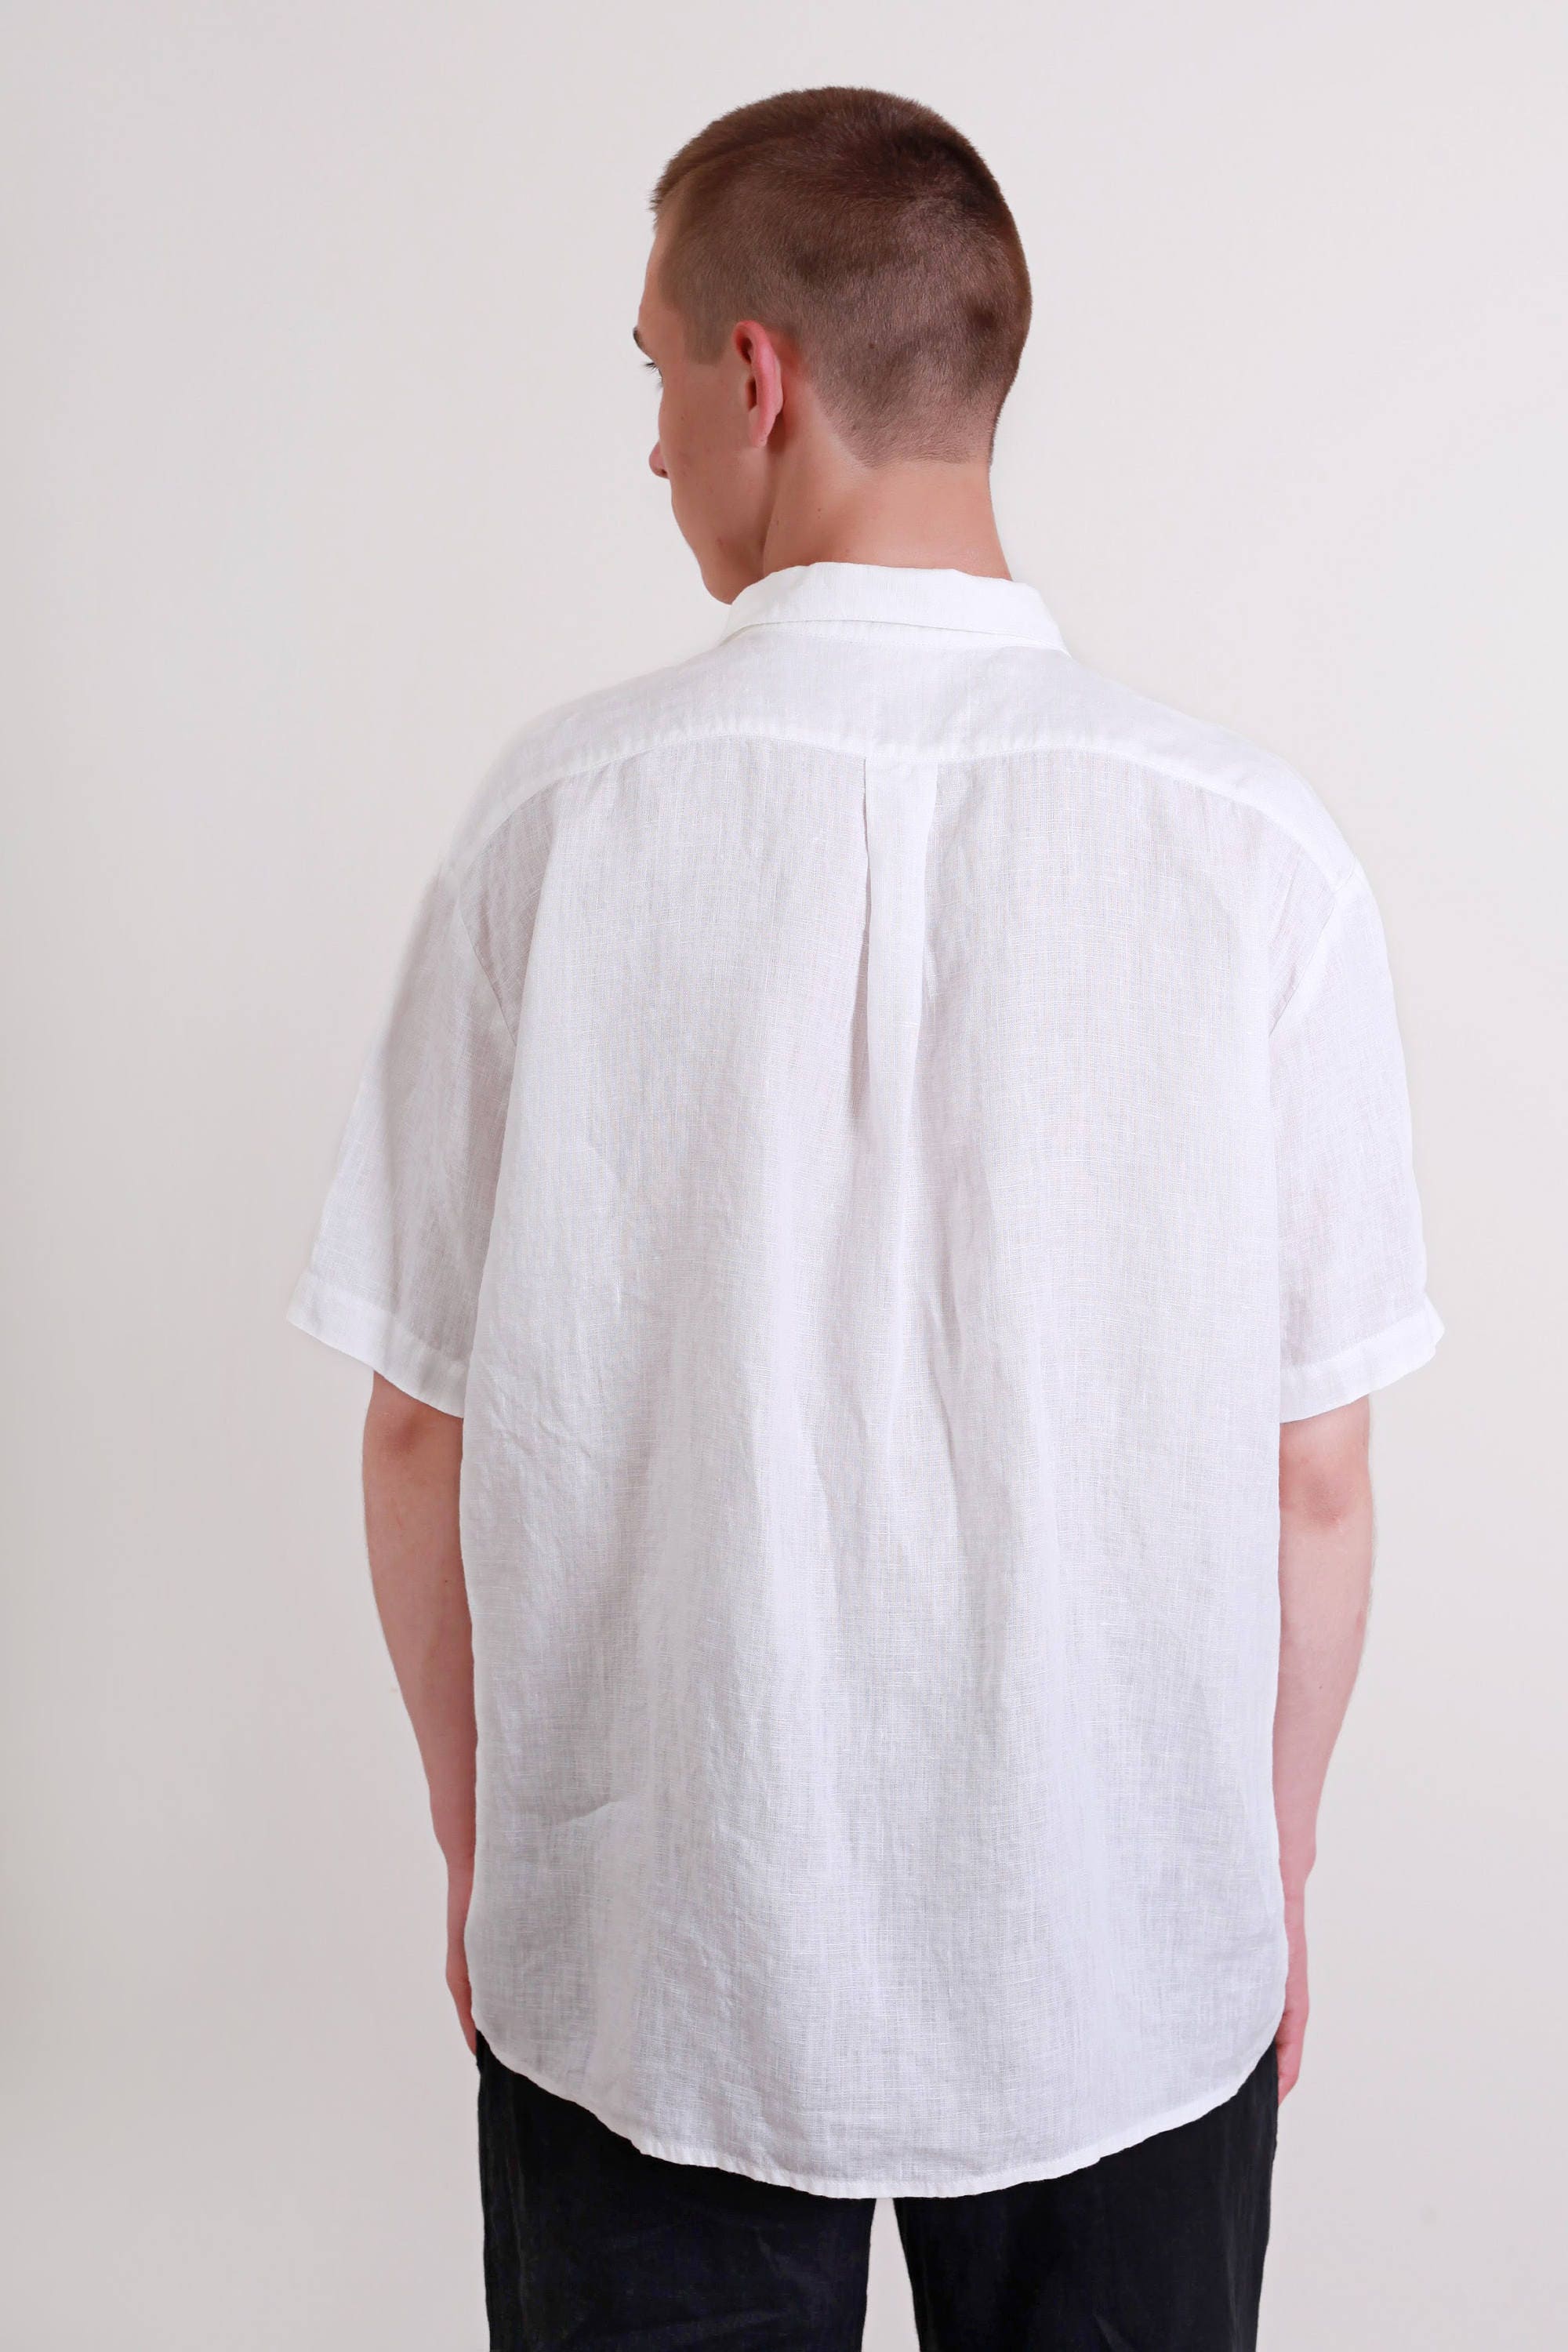 Linen White Men's Shirt Short Sleeves / Casual Style | Etsy